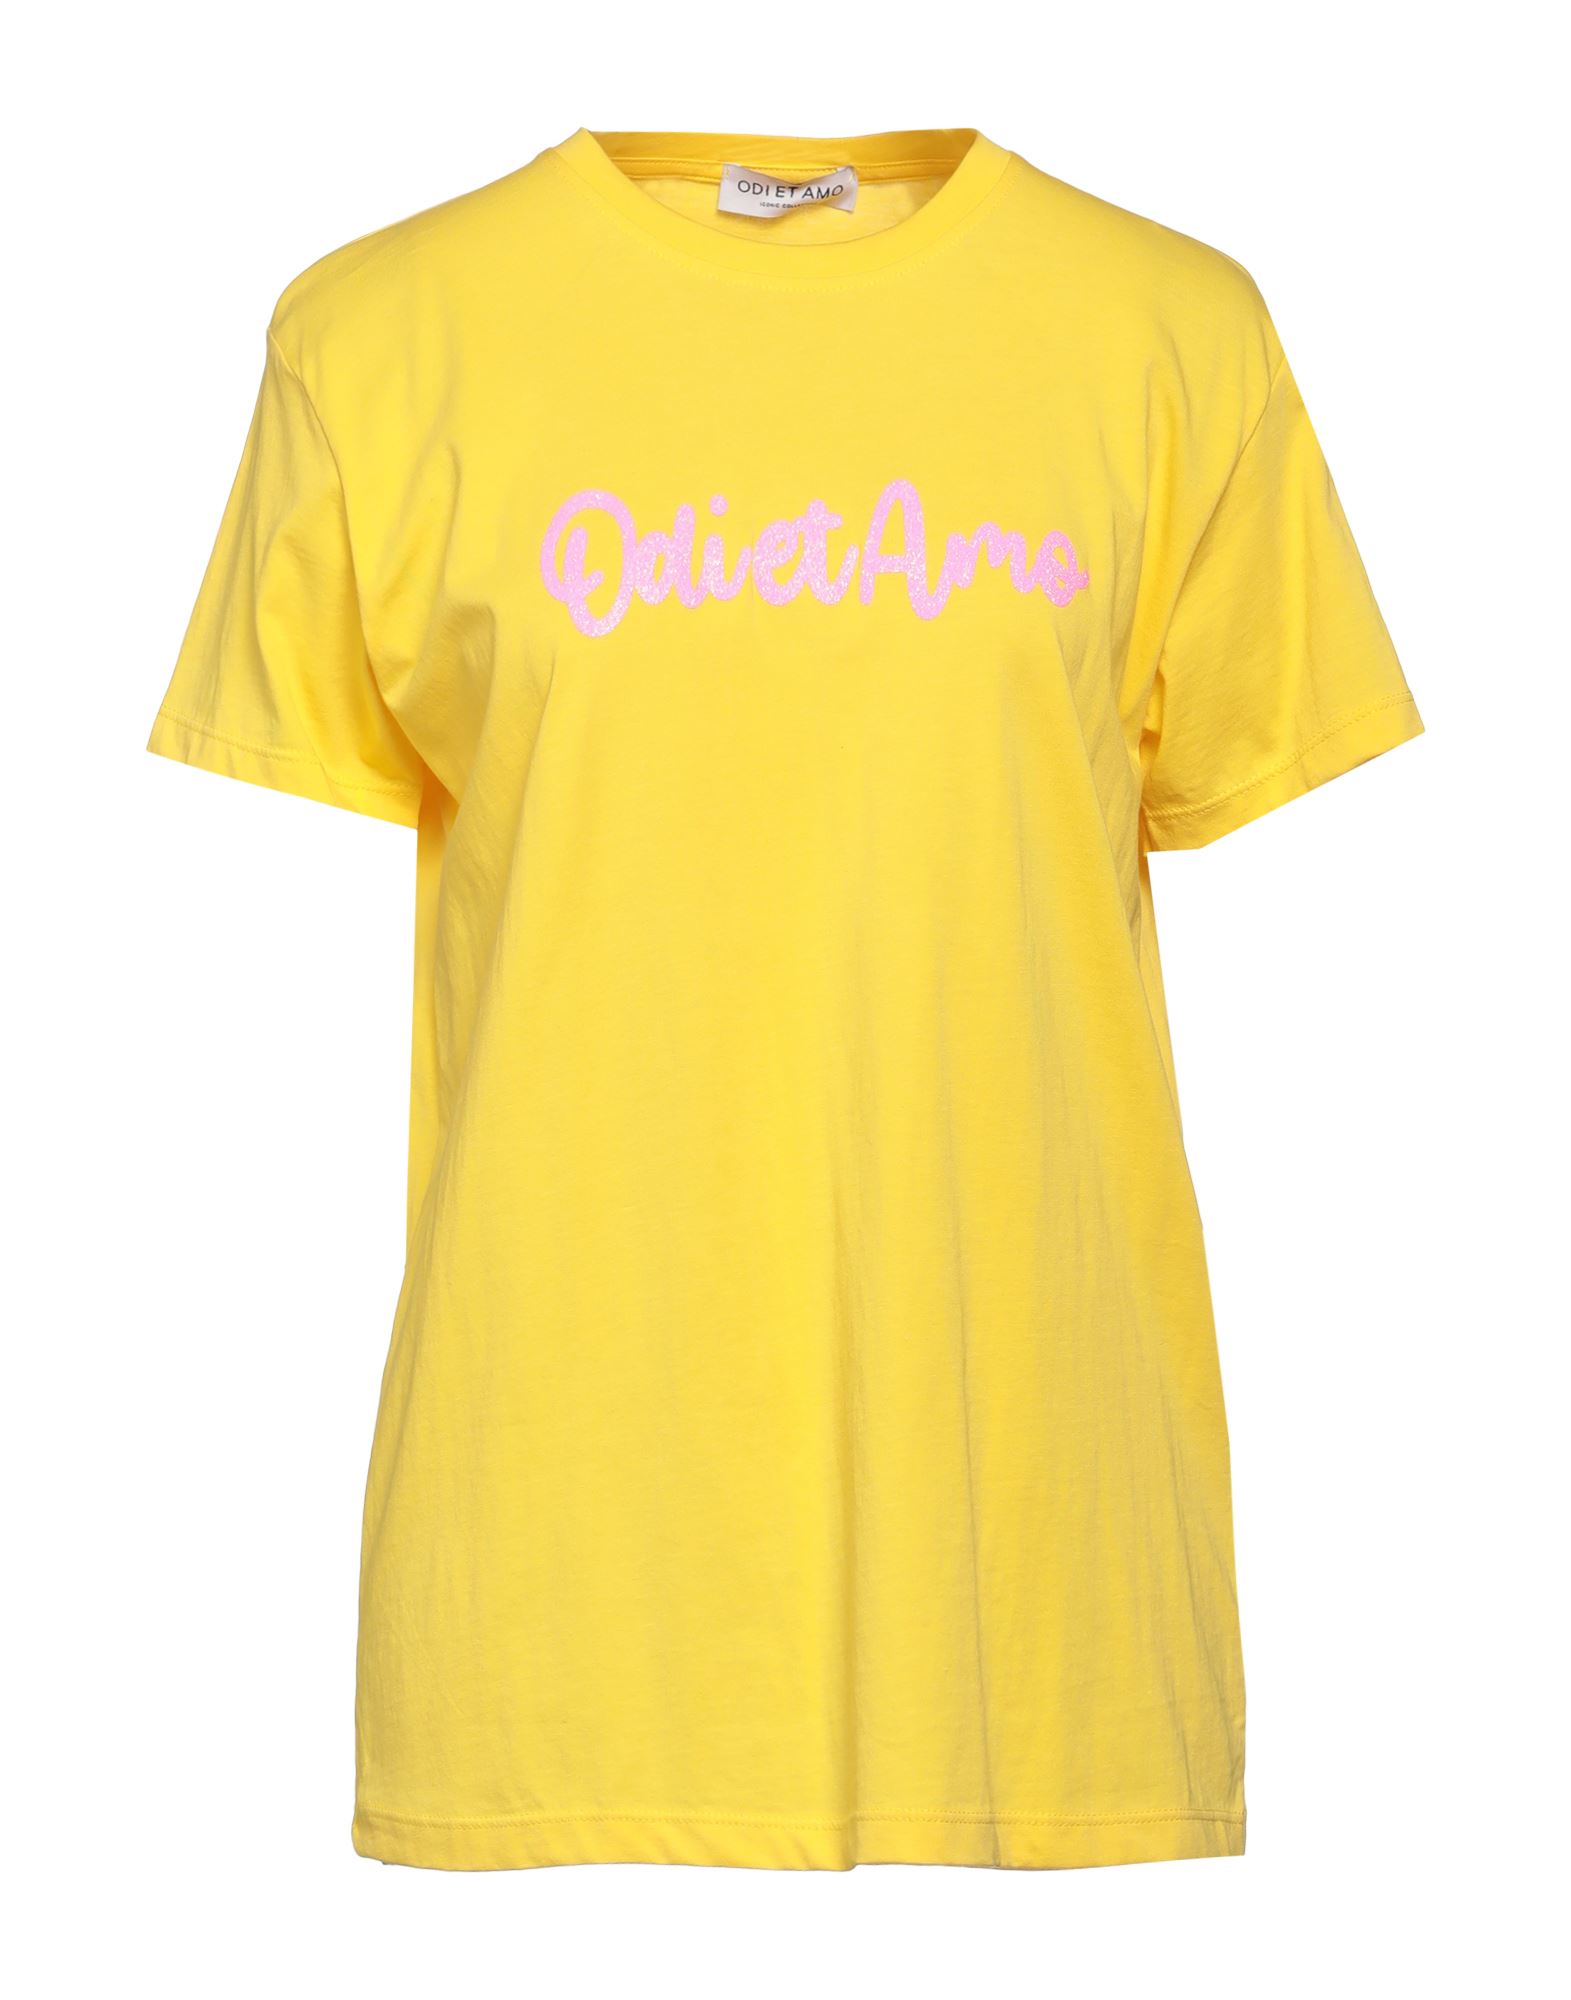 Odi Et Amo T-shirts In Yellow